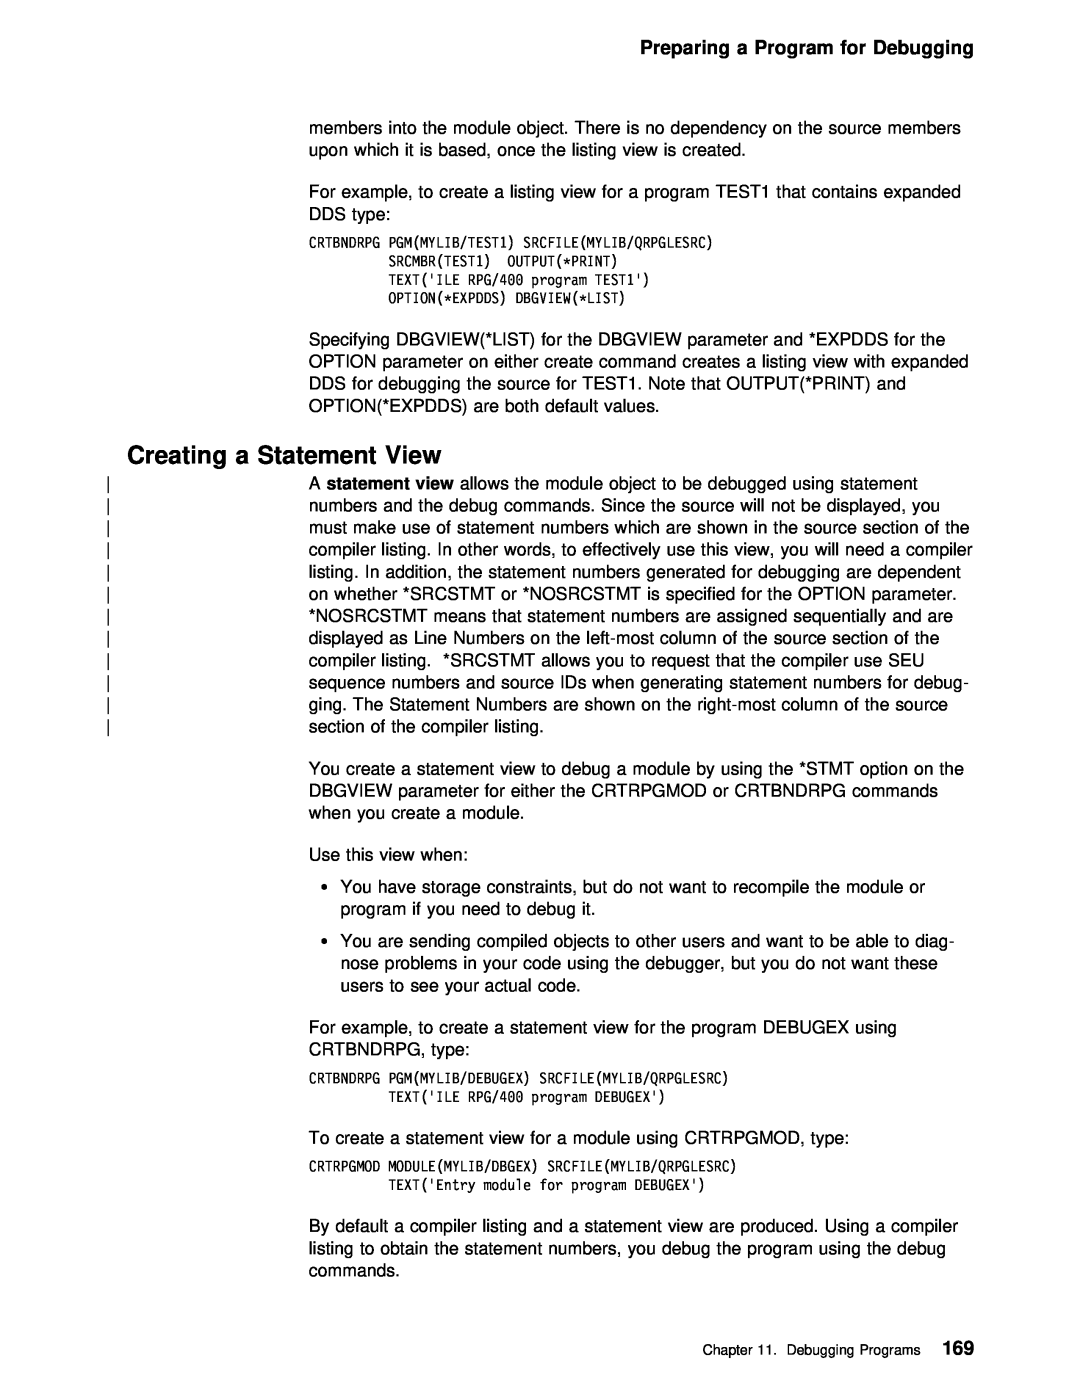 IBM AS/400 manual a Statement, View, Program for Debugging, Creating 